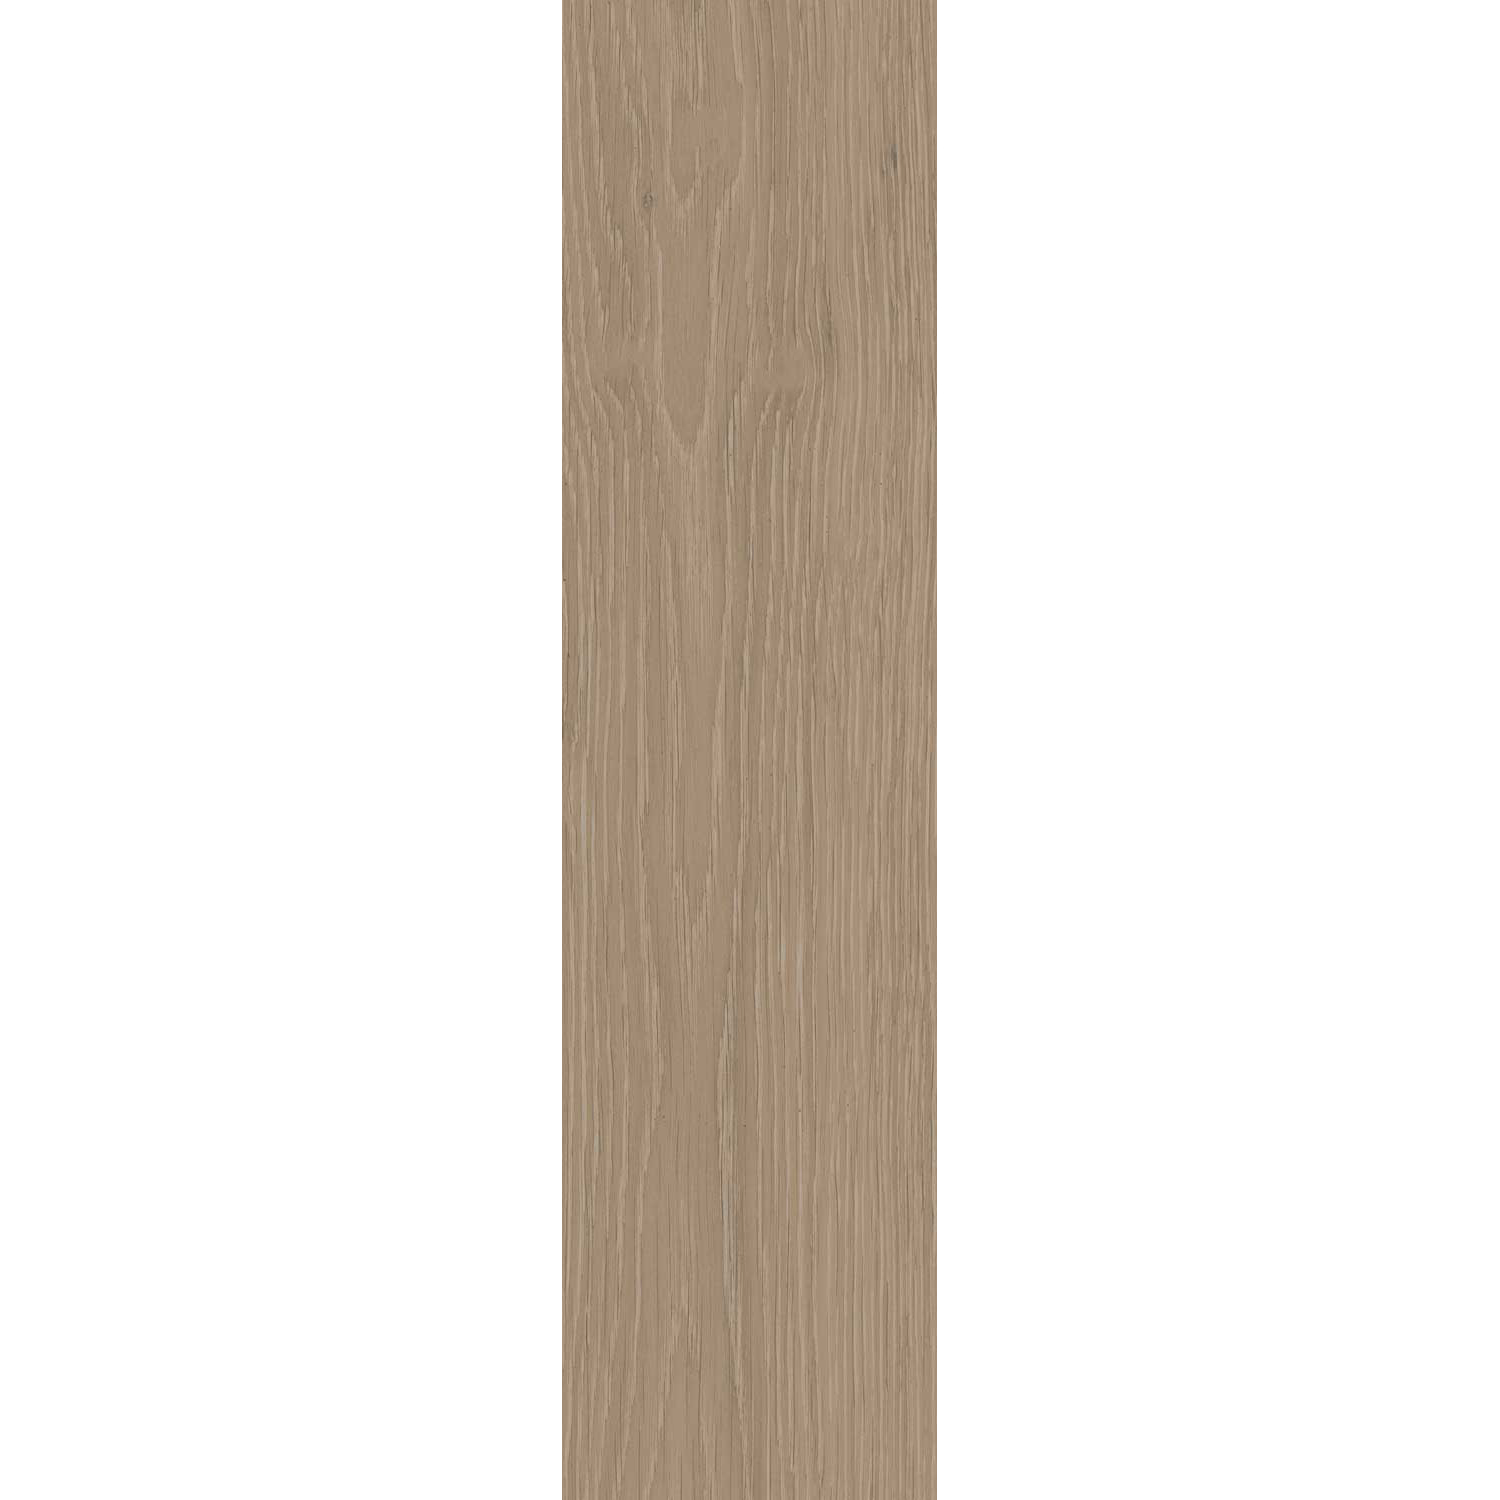 Плитка Kerama Marazzi Листоне коричневый светлый SG402400N 9,9x40,2 см плитка kerama marazzi раваль светло серый 29x33 4 см